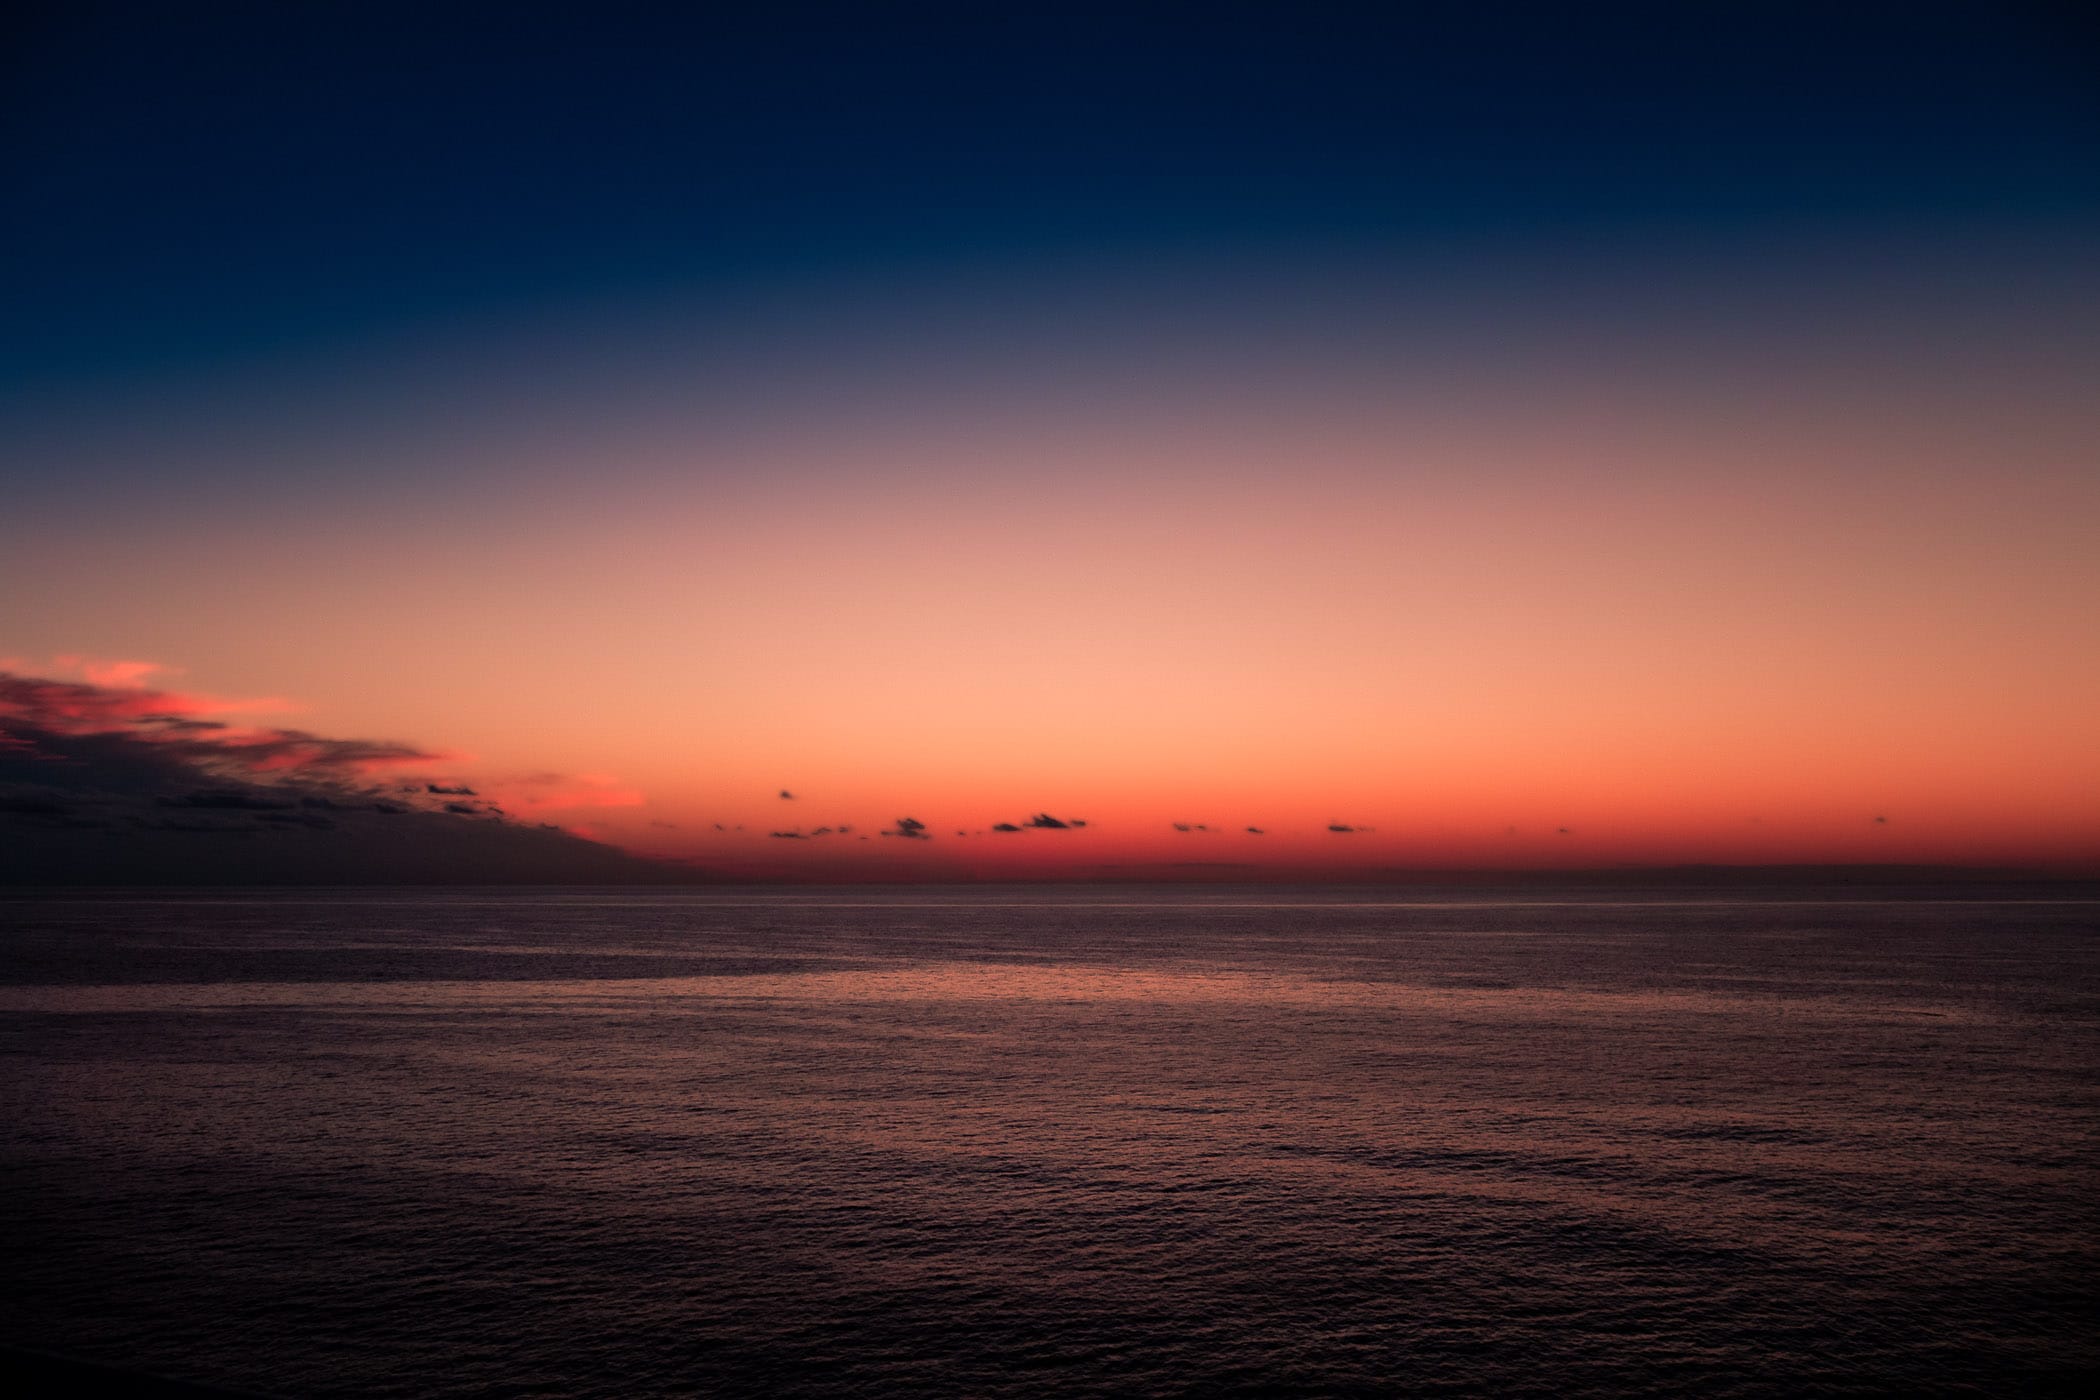 The last light of day illuminates the sky over the Gulf of Mexico, somewhere between Mexico's Yucatan Peninsula and the Texas coast.